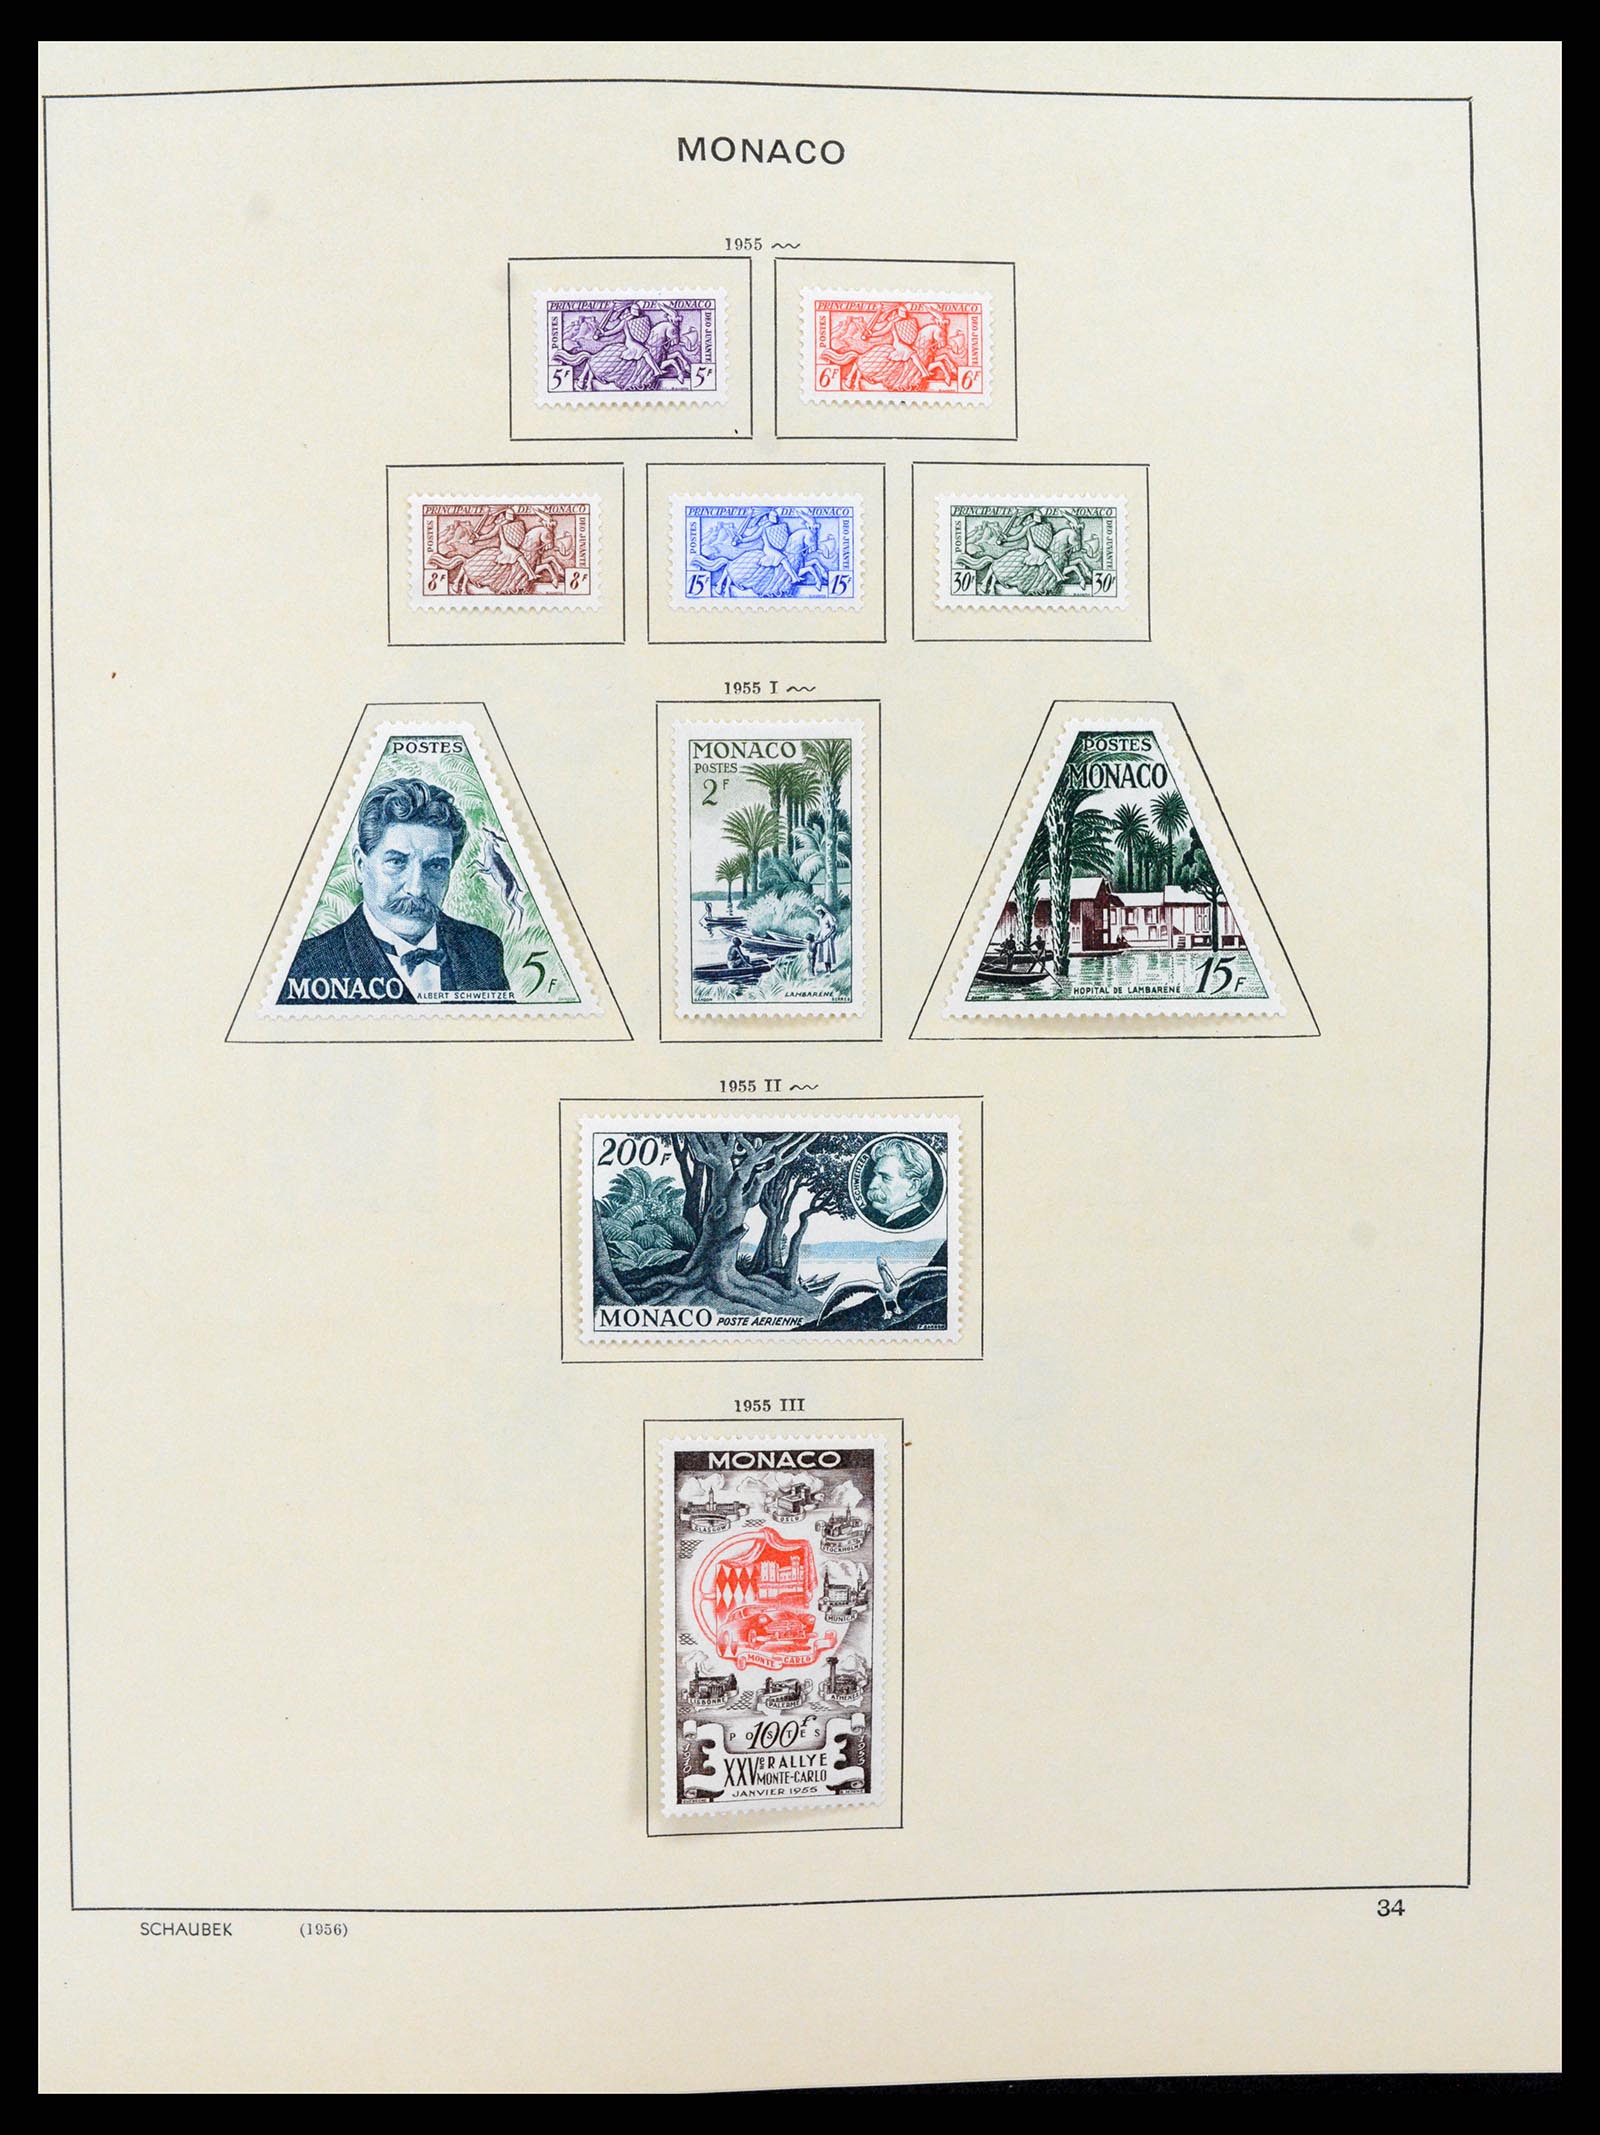 37570 039 - Stamp collection 37570 Monaco 1885-2013.